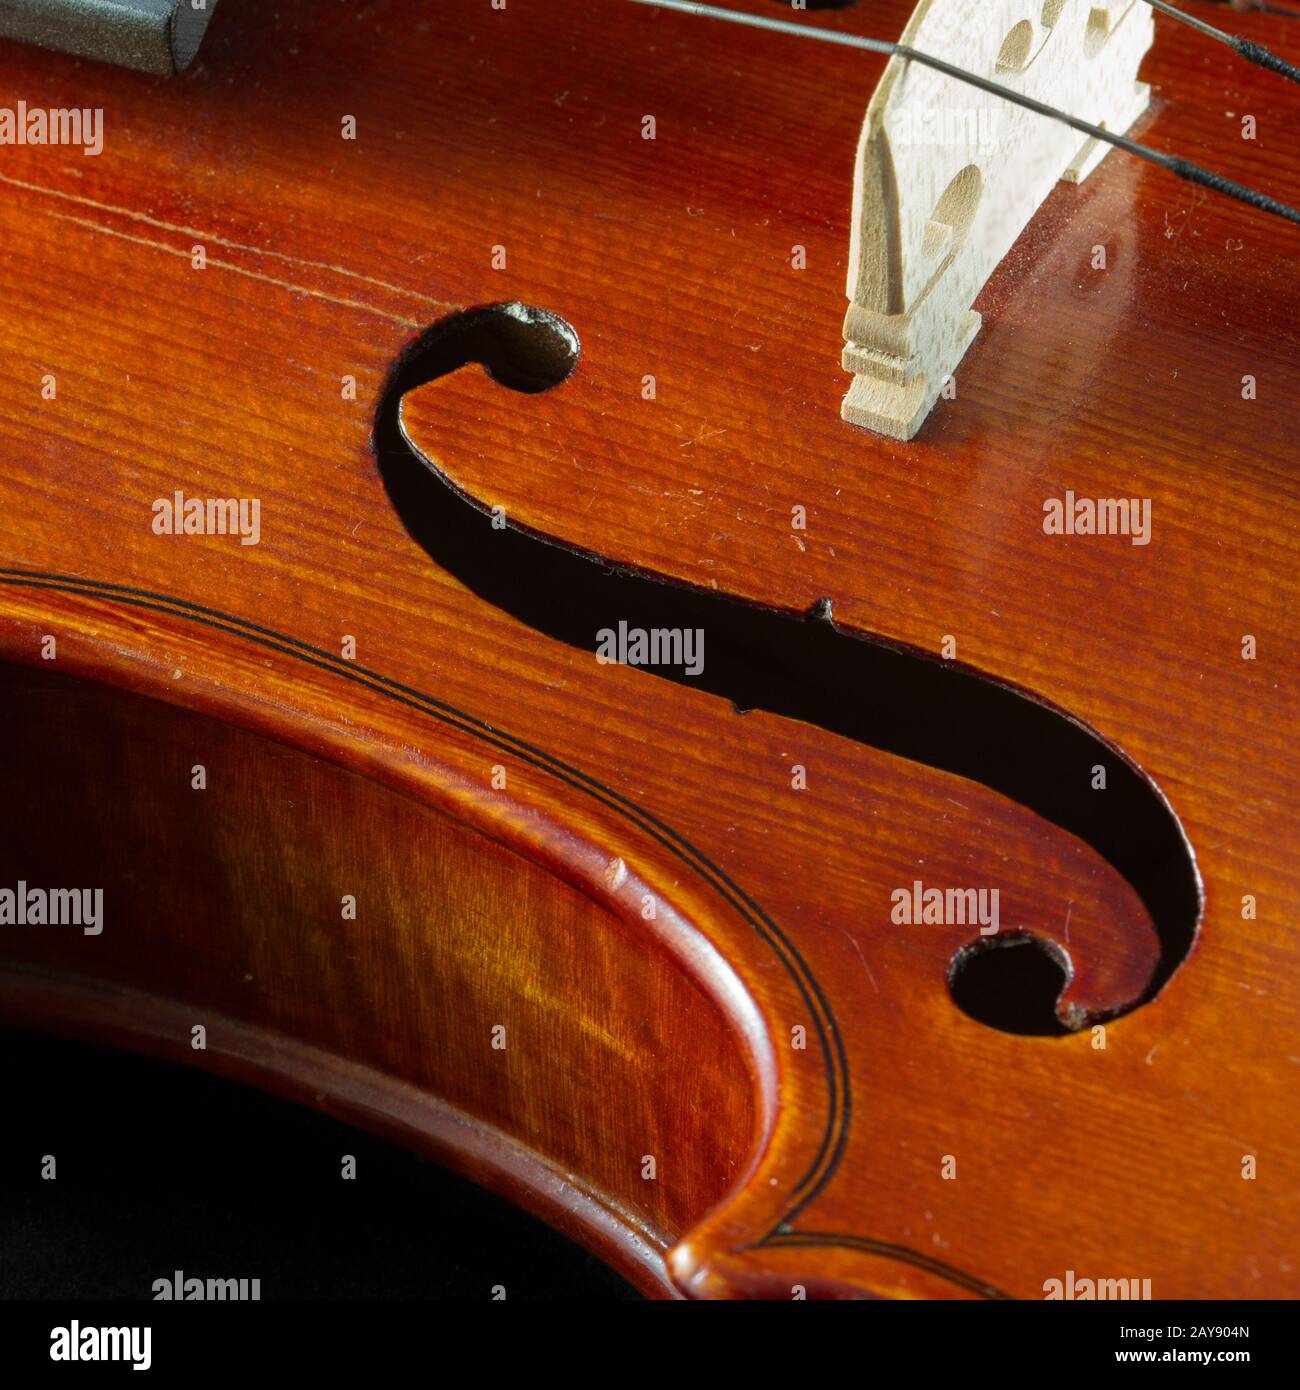 Violin close-up Stock Photo - Alamy